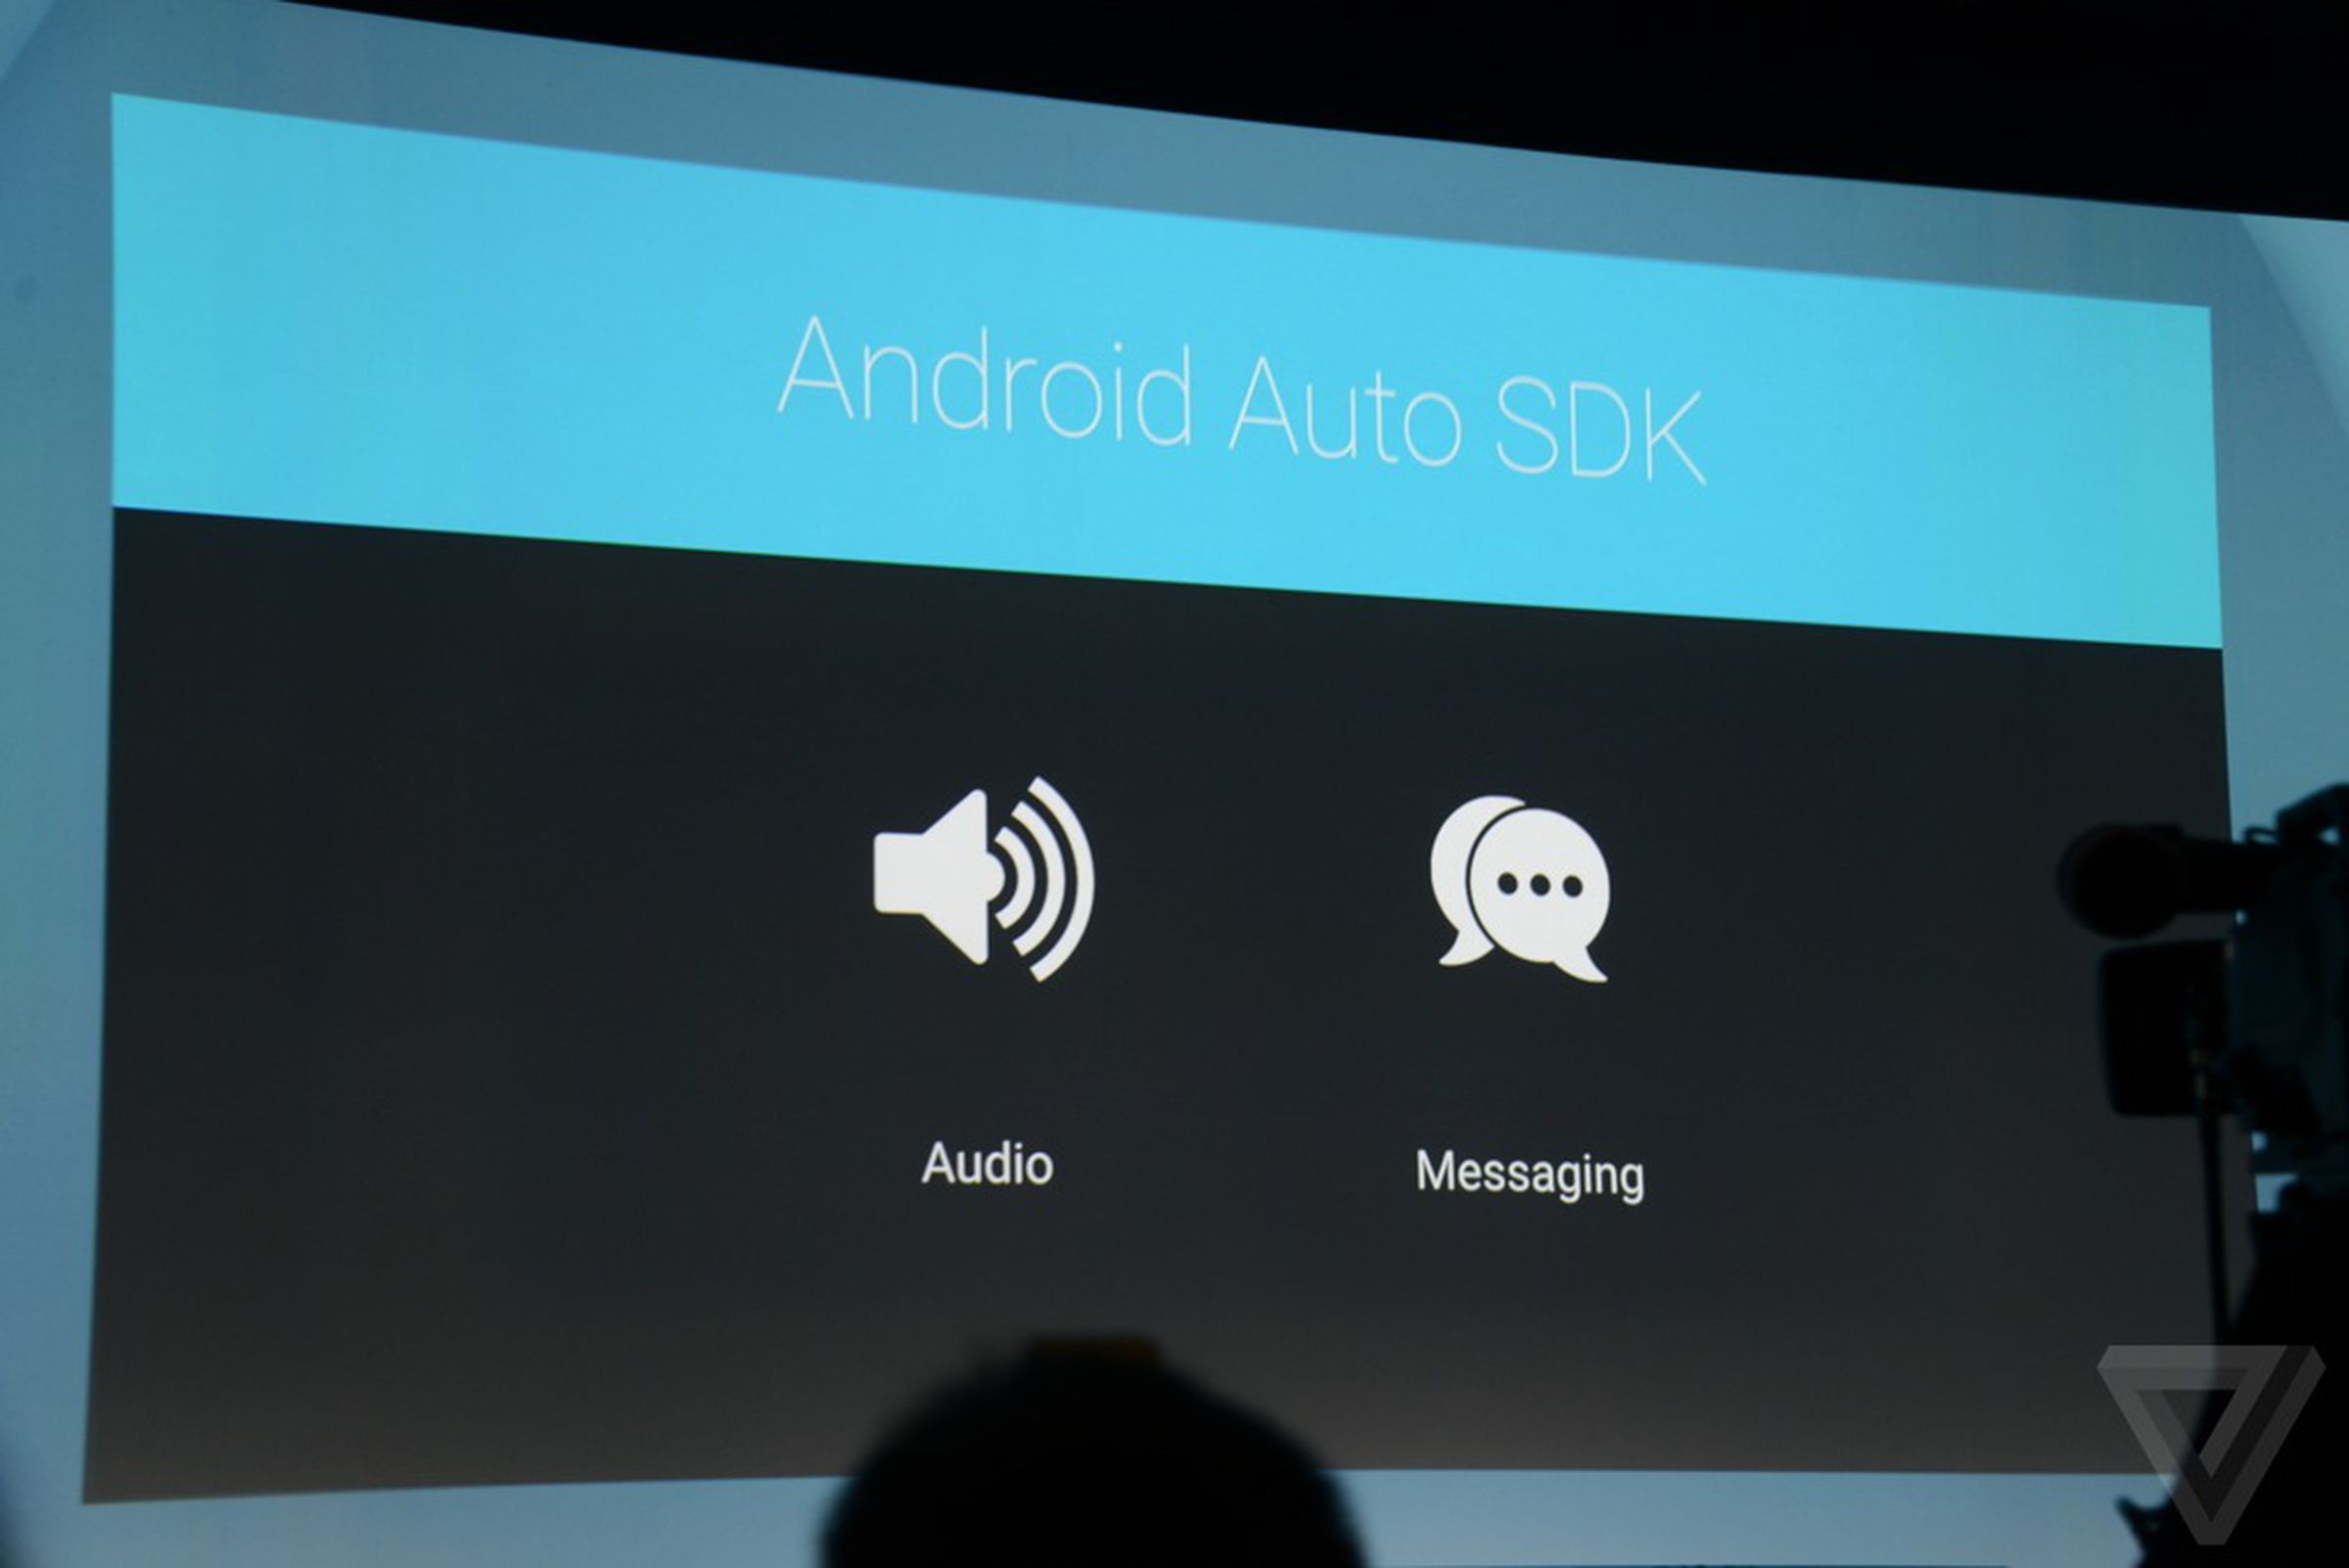 Google Android Auto Photos